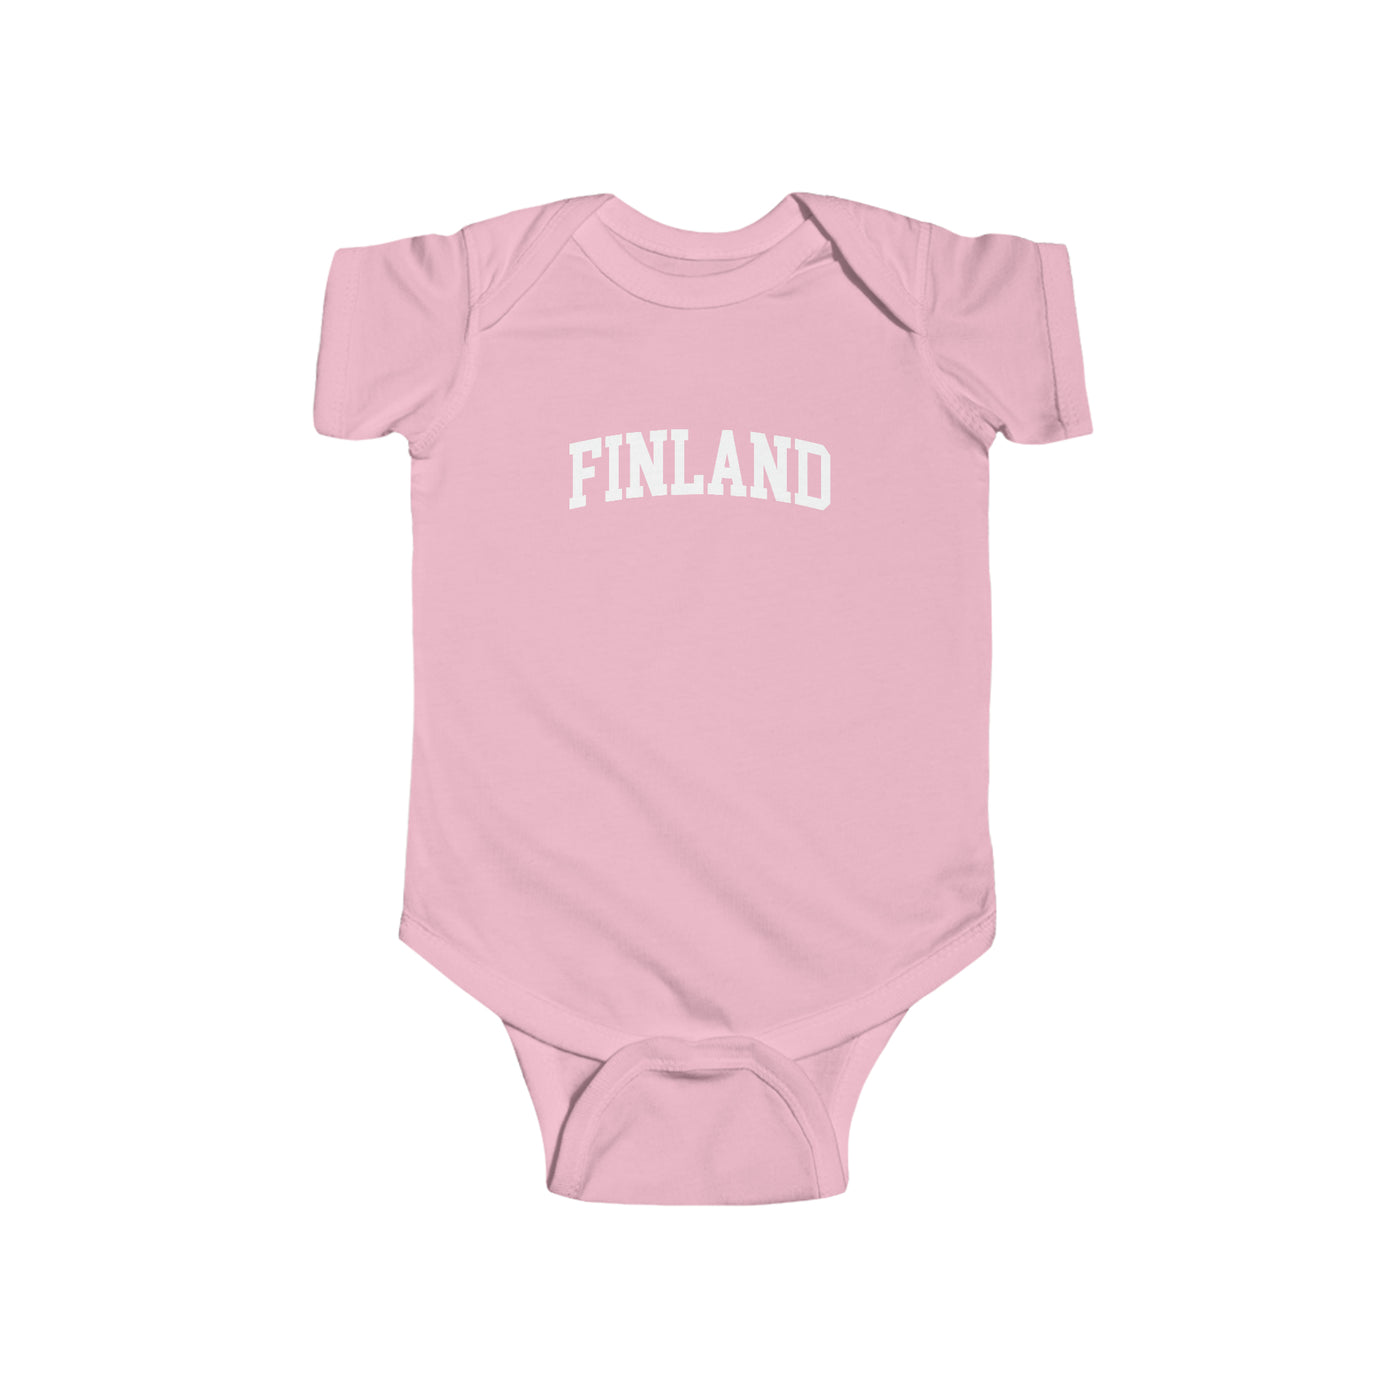 Finland University Baby Bodysuit